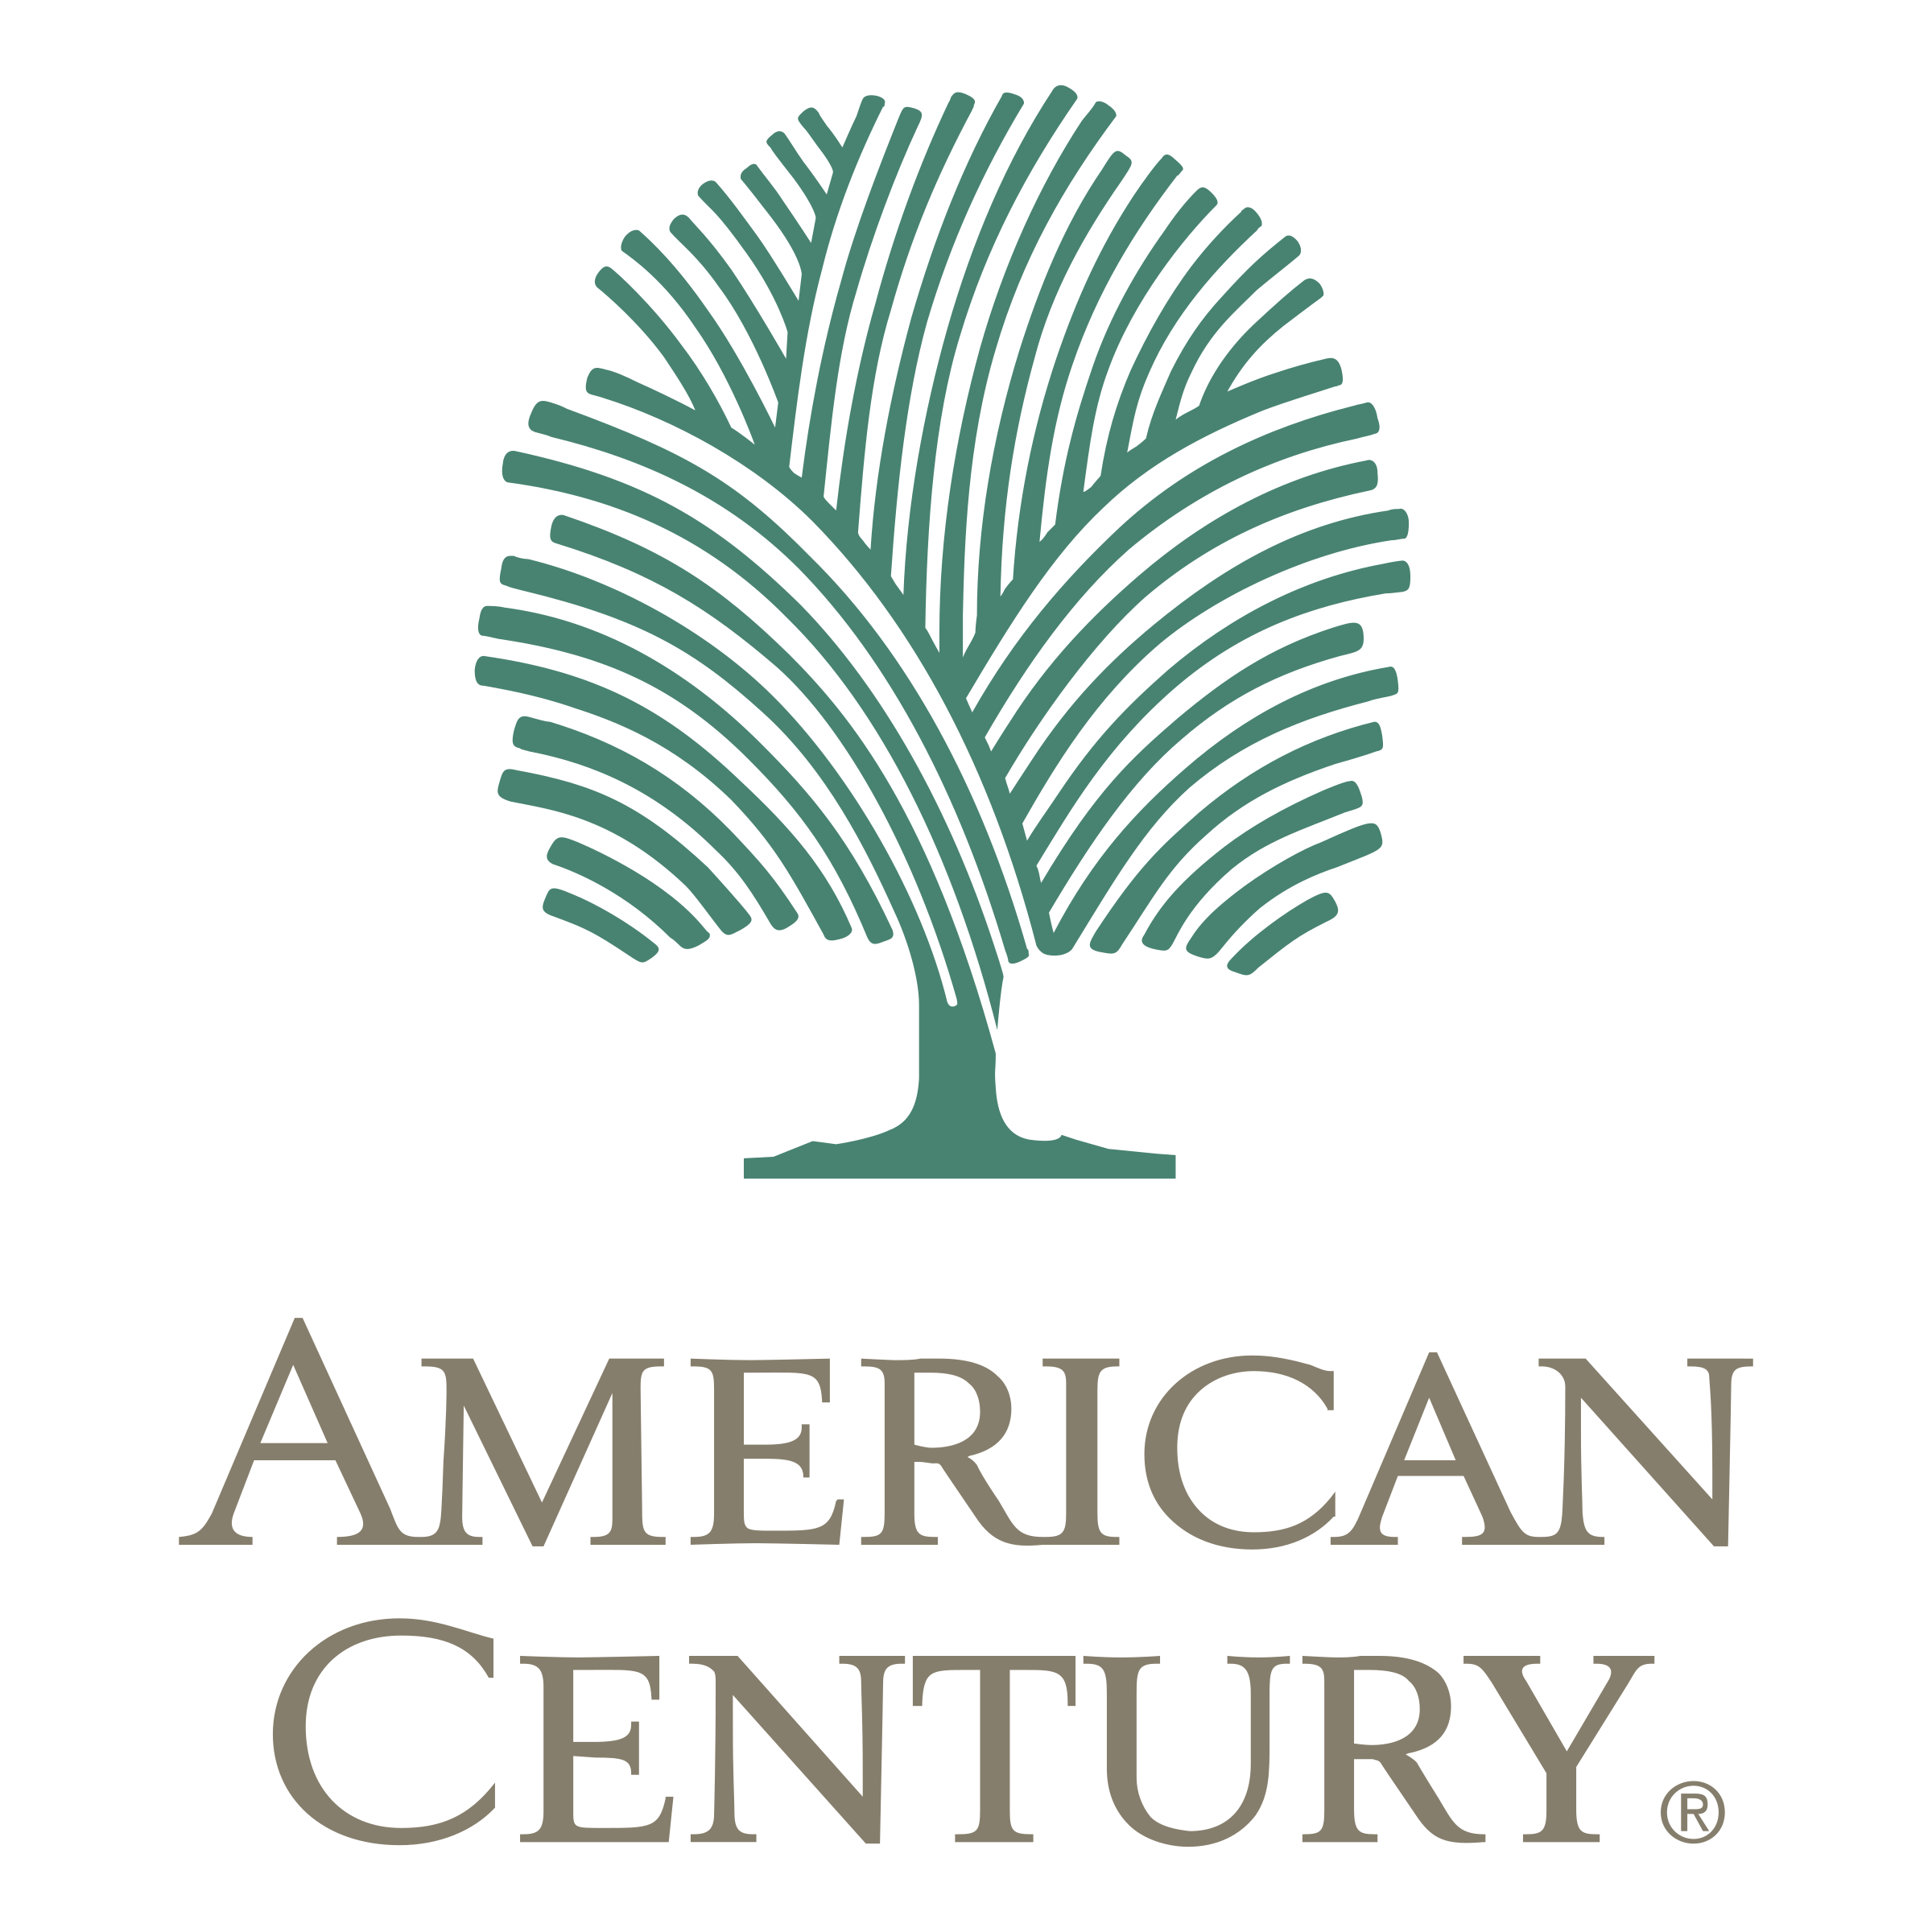 American Century Logo - American Century Logo PNG Transparent & SVG Vector - Freebie Supply